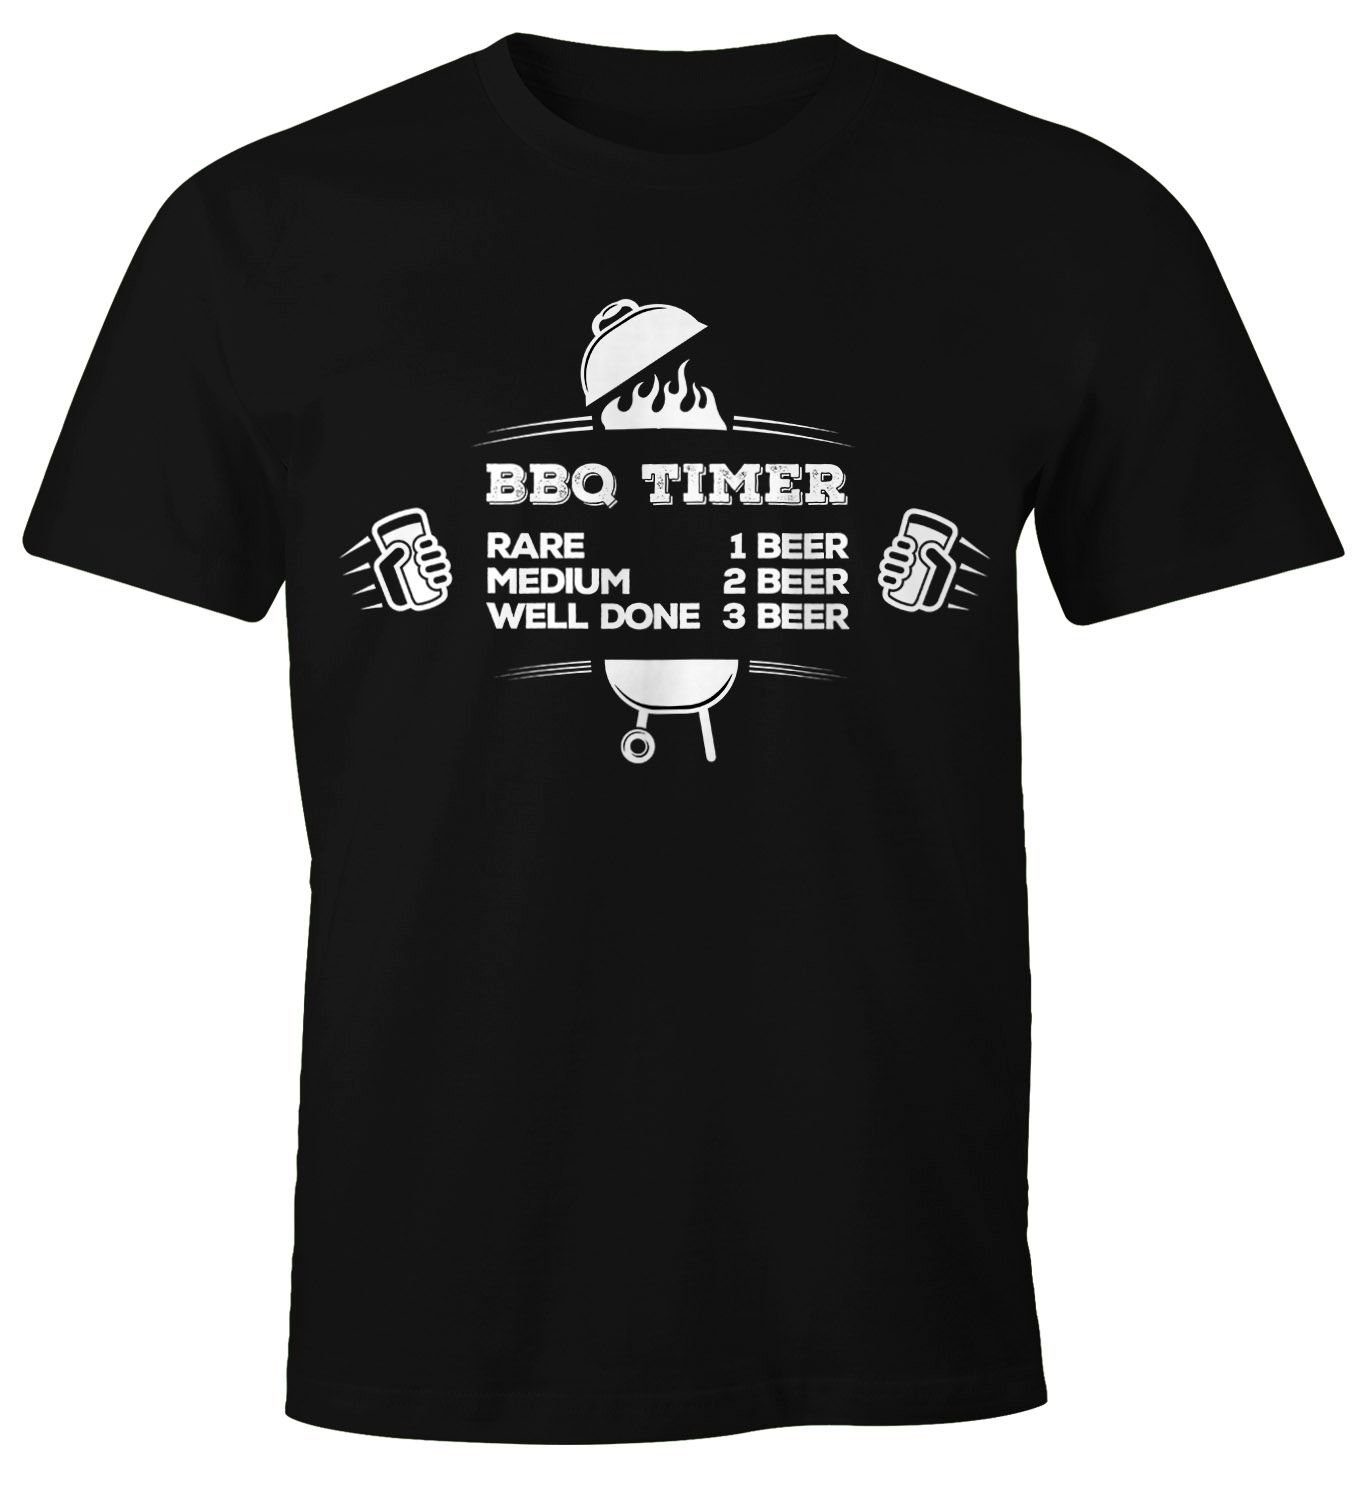 MoonWorks Print-Shirt Herren T-Shirt BBQ Timer Fun-Shirt Grillen Barbecue Tee Sommer Food Moonworks® mit Print schwarz